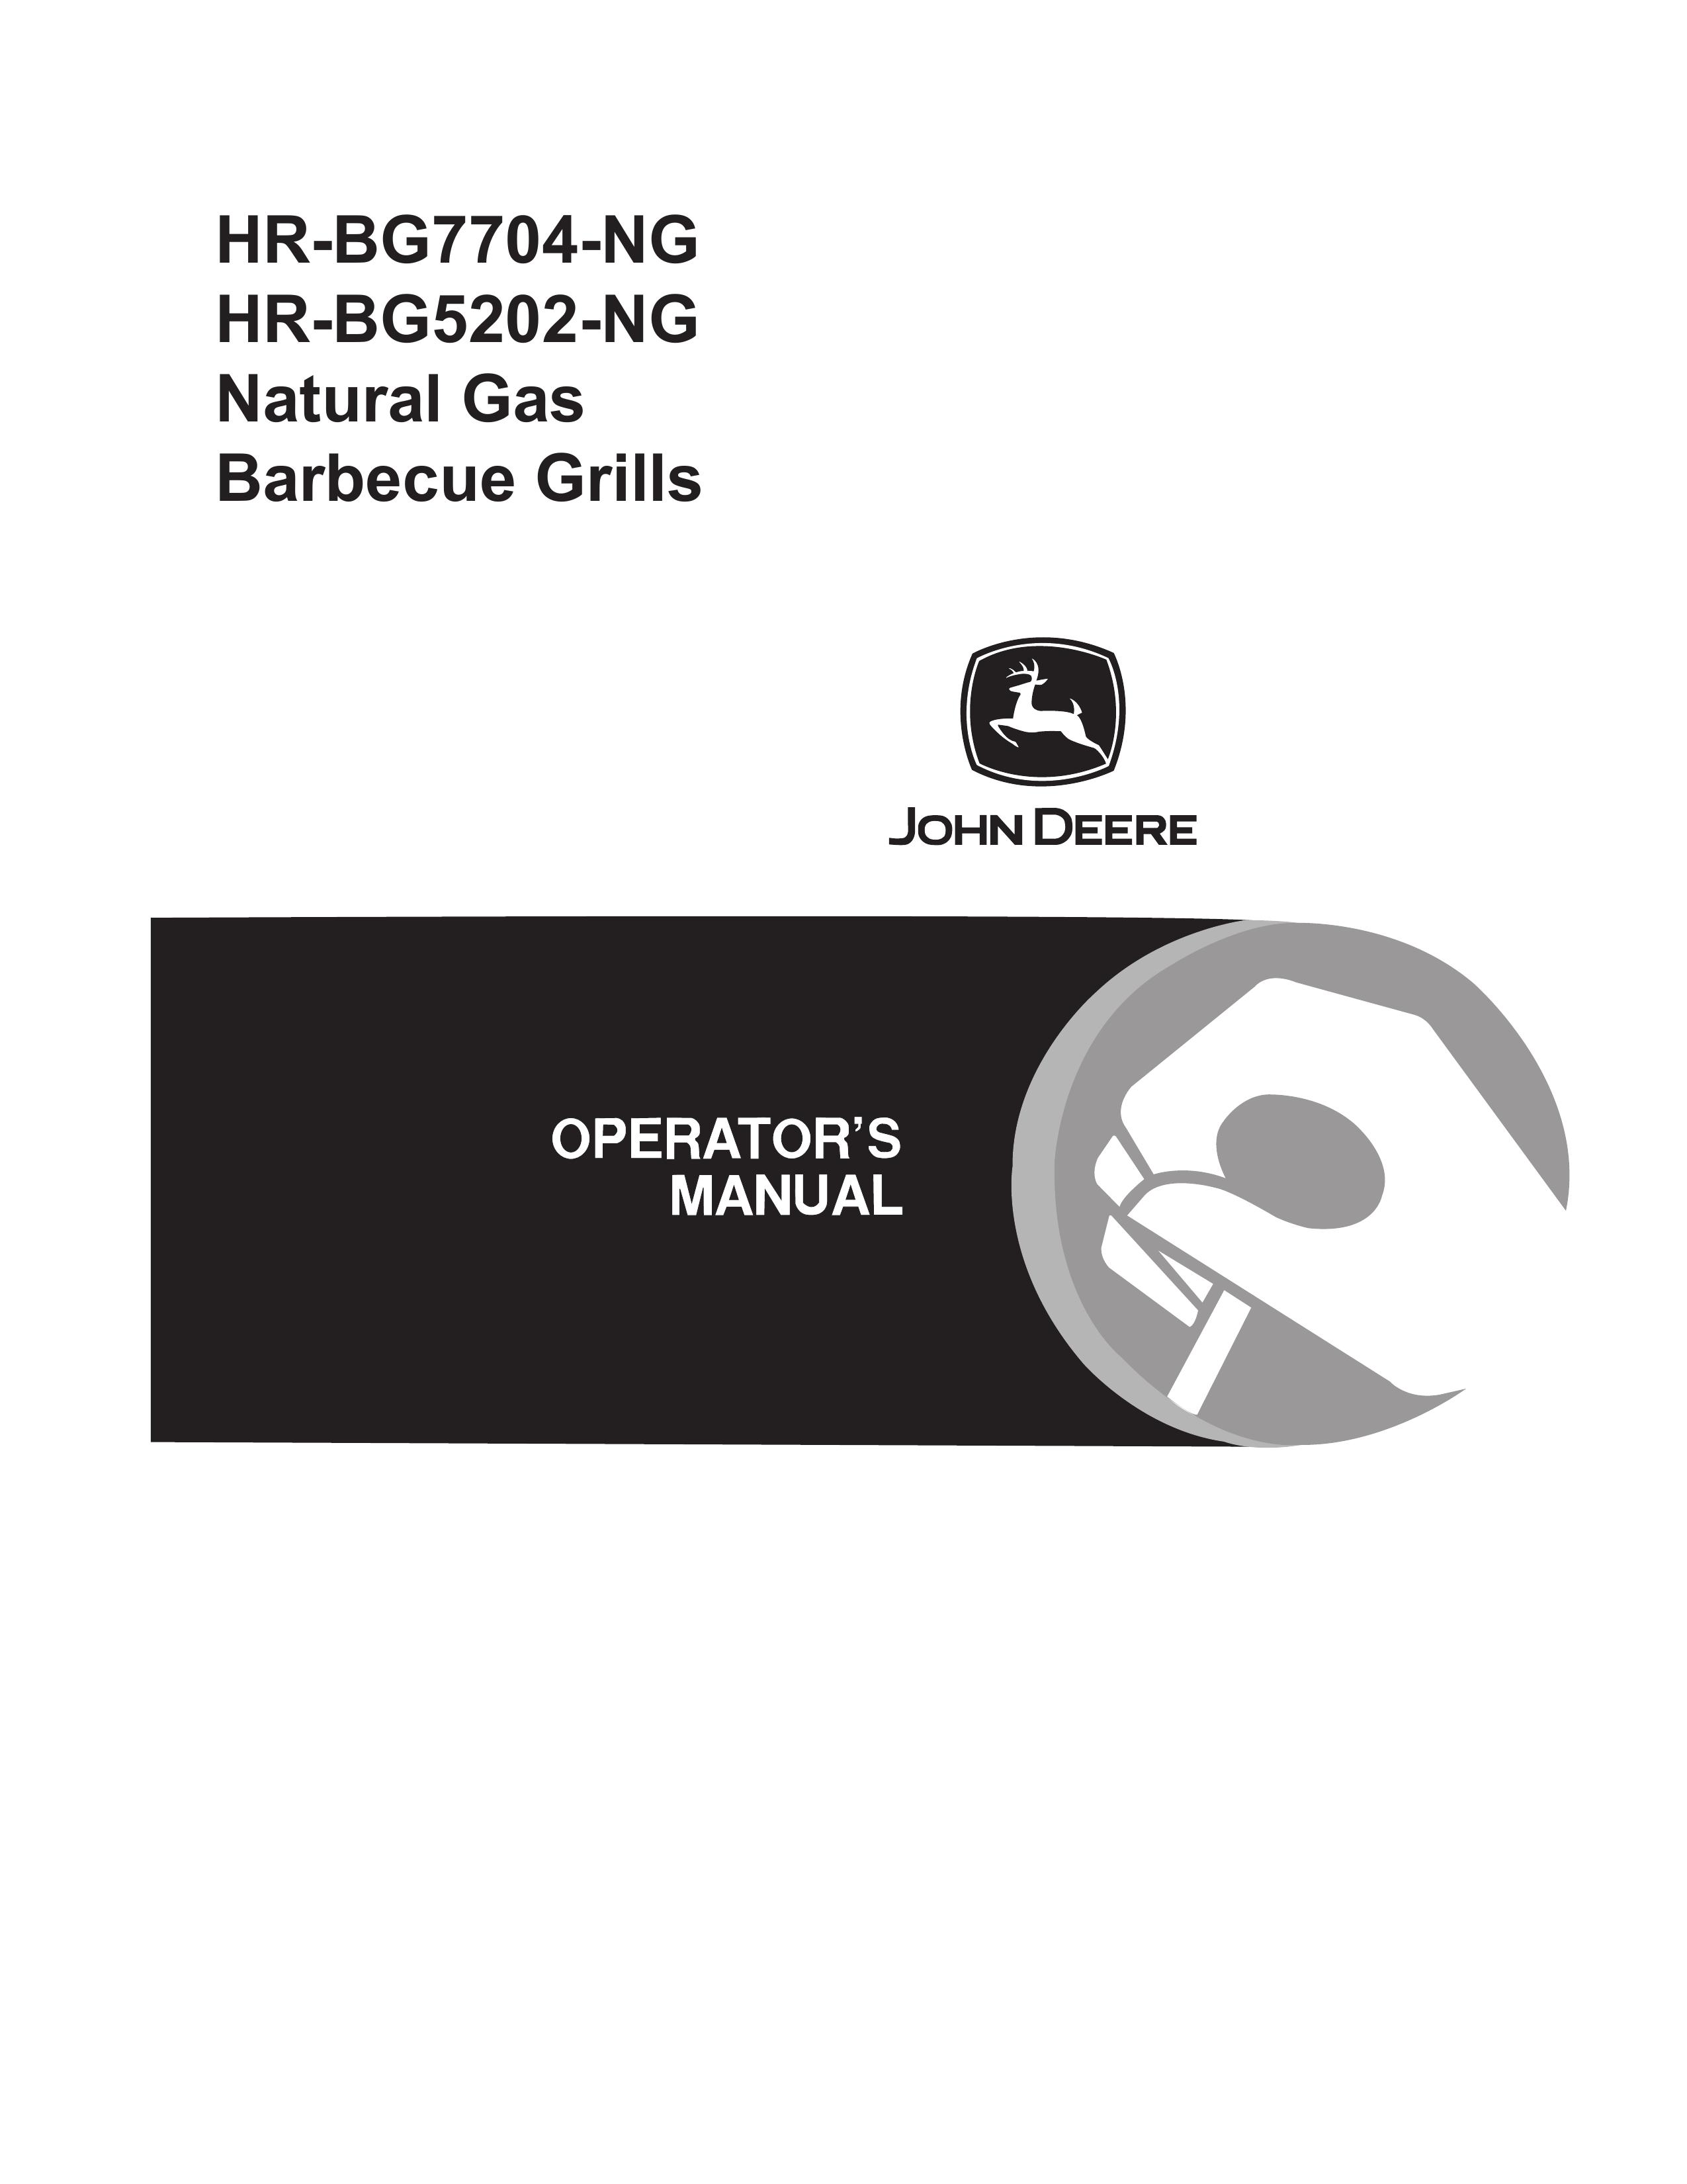 John Deere HR-BG5202-NG Gas Grill User Manual